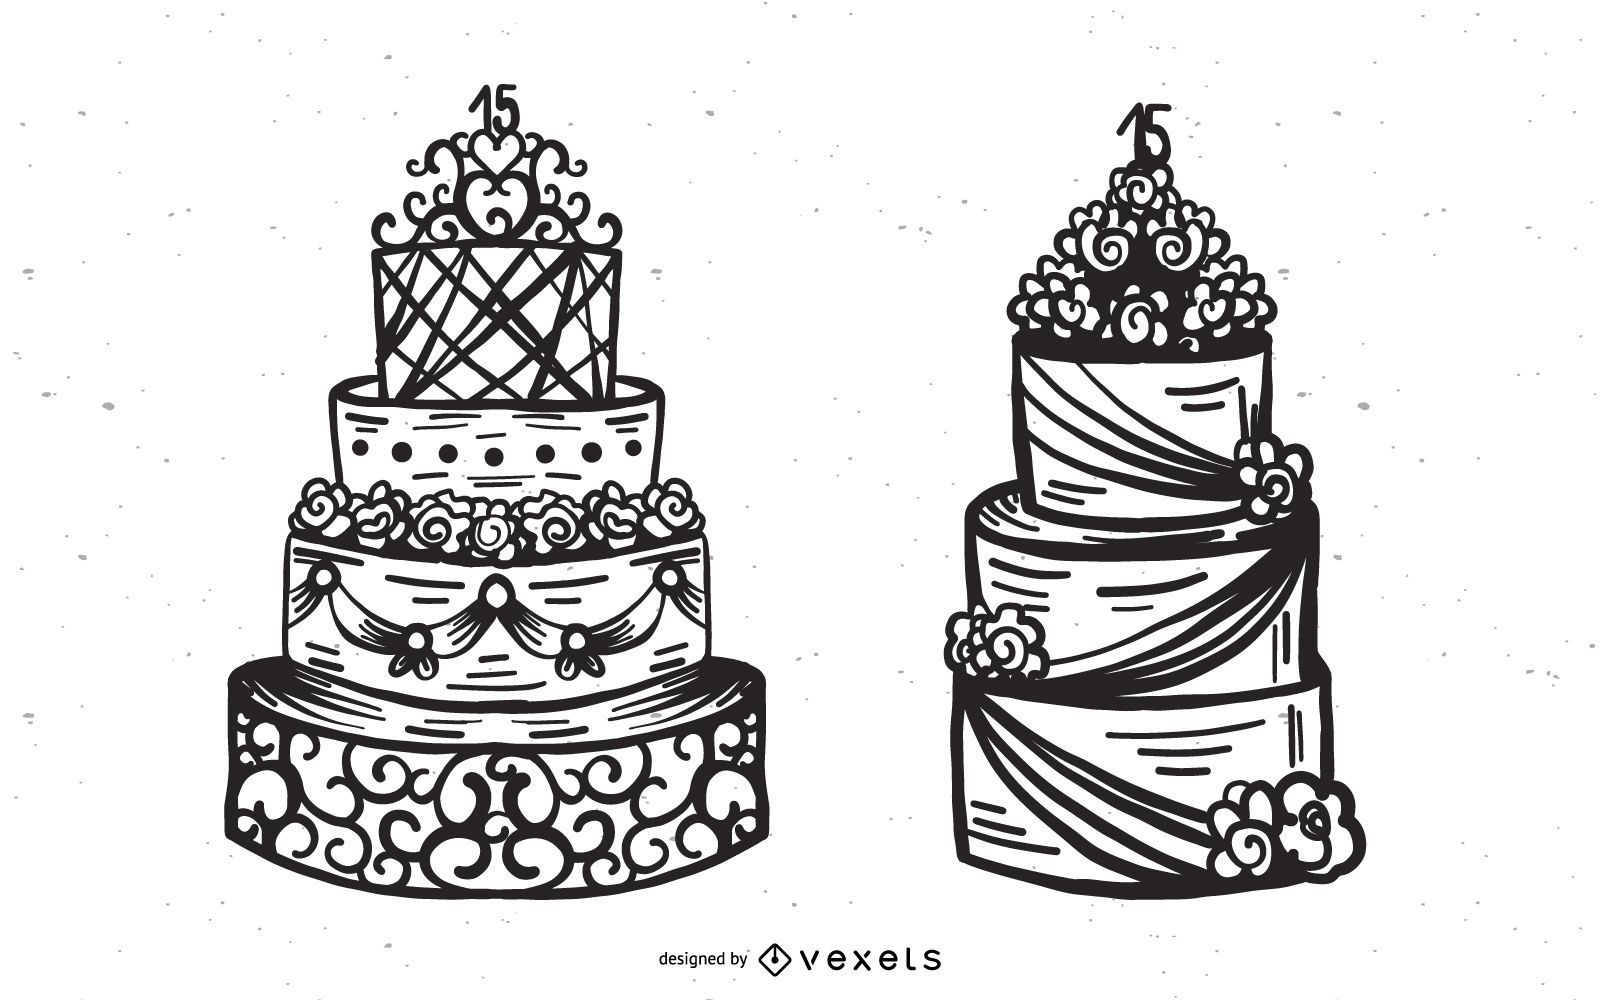 Piece Of Cake Vector Vector Art & Graphics | freevector.com